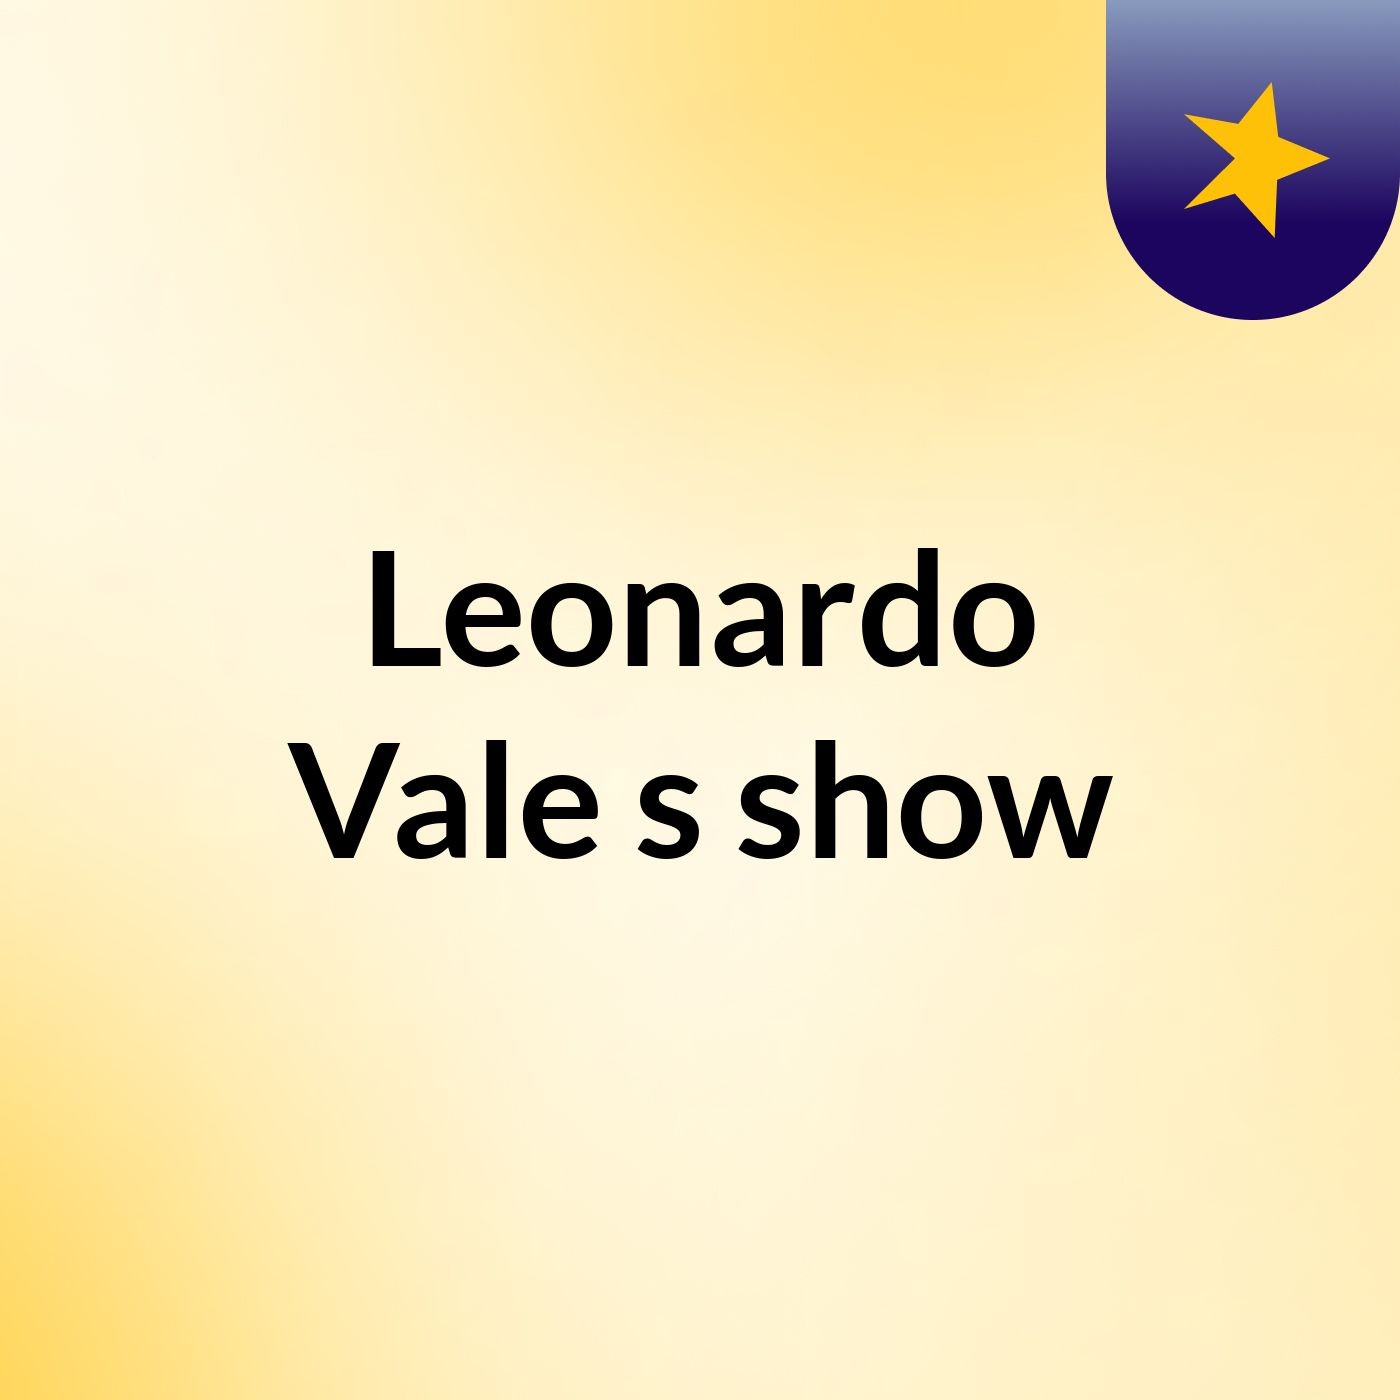 Leonardo Vale's show